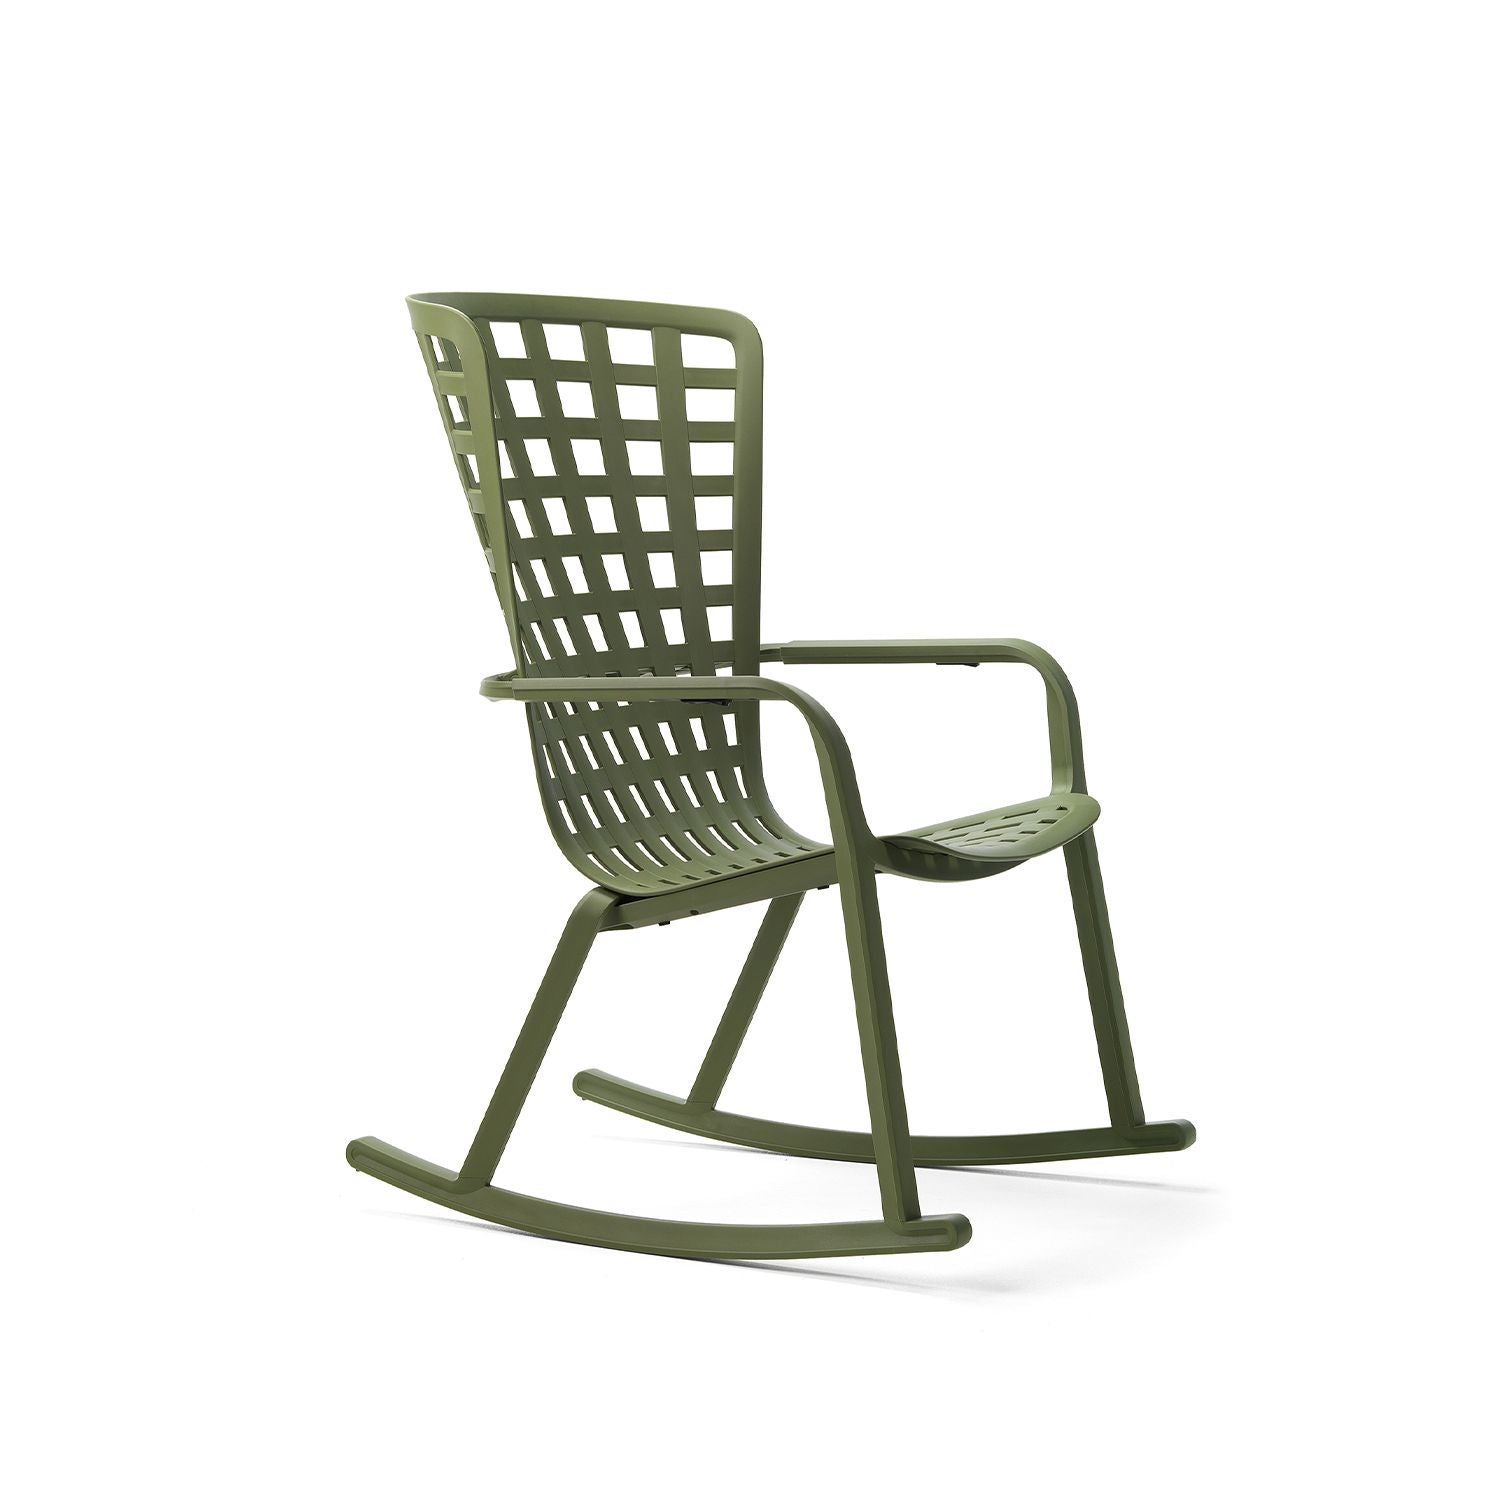 Folio Rocking Chair By Nardi - Olive